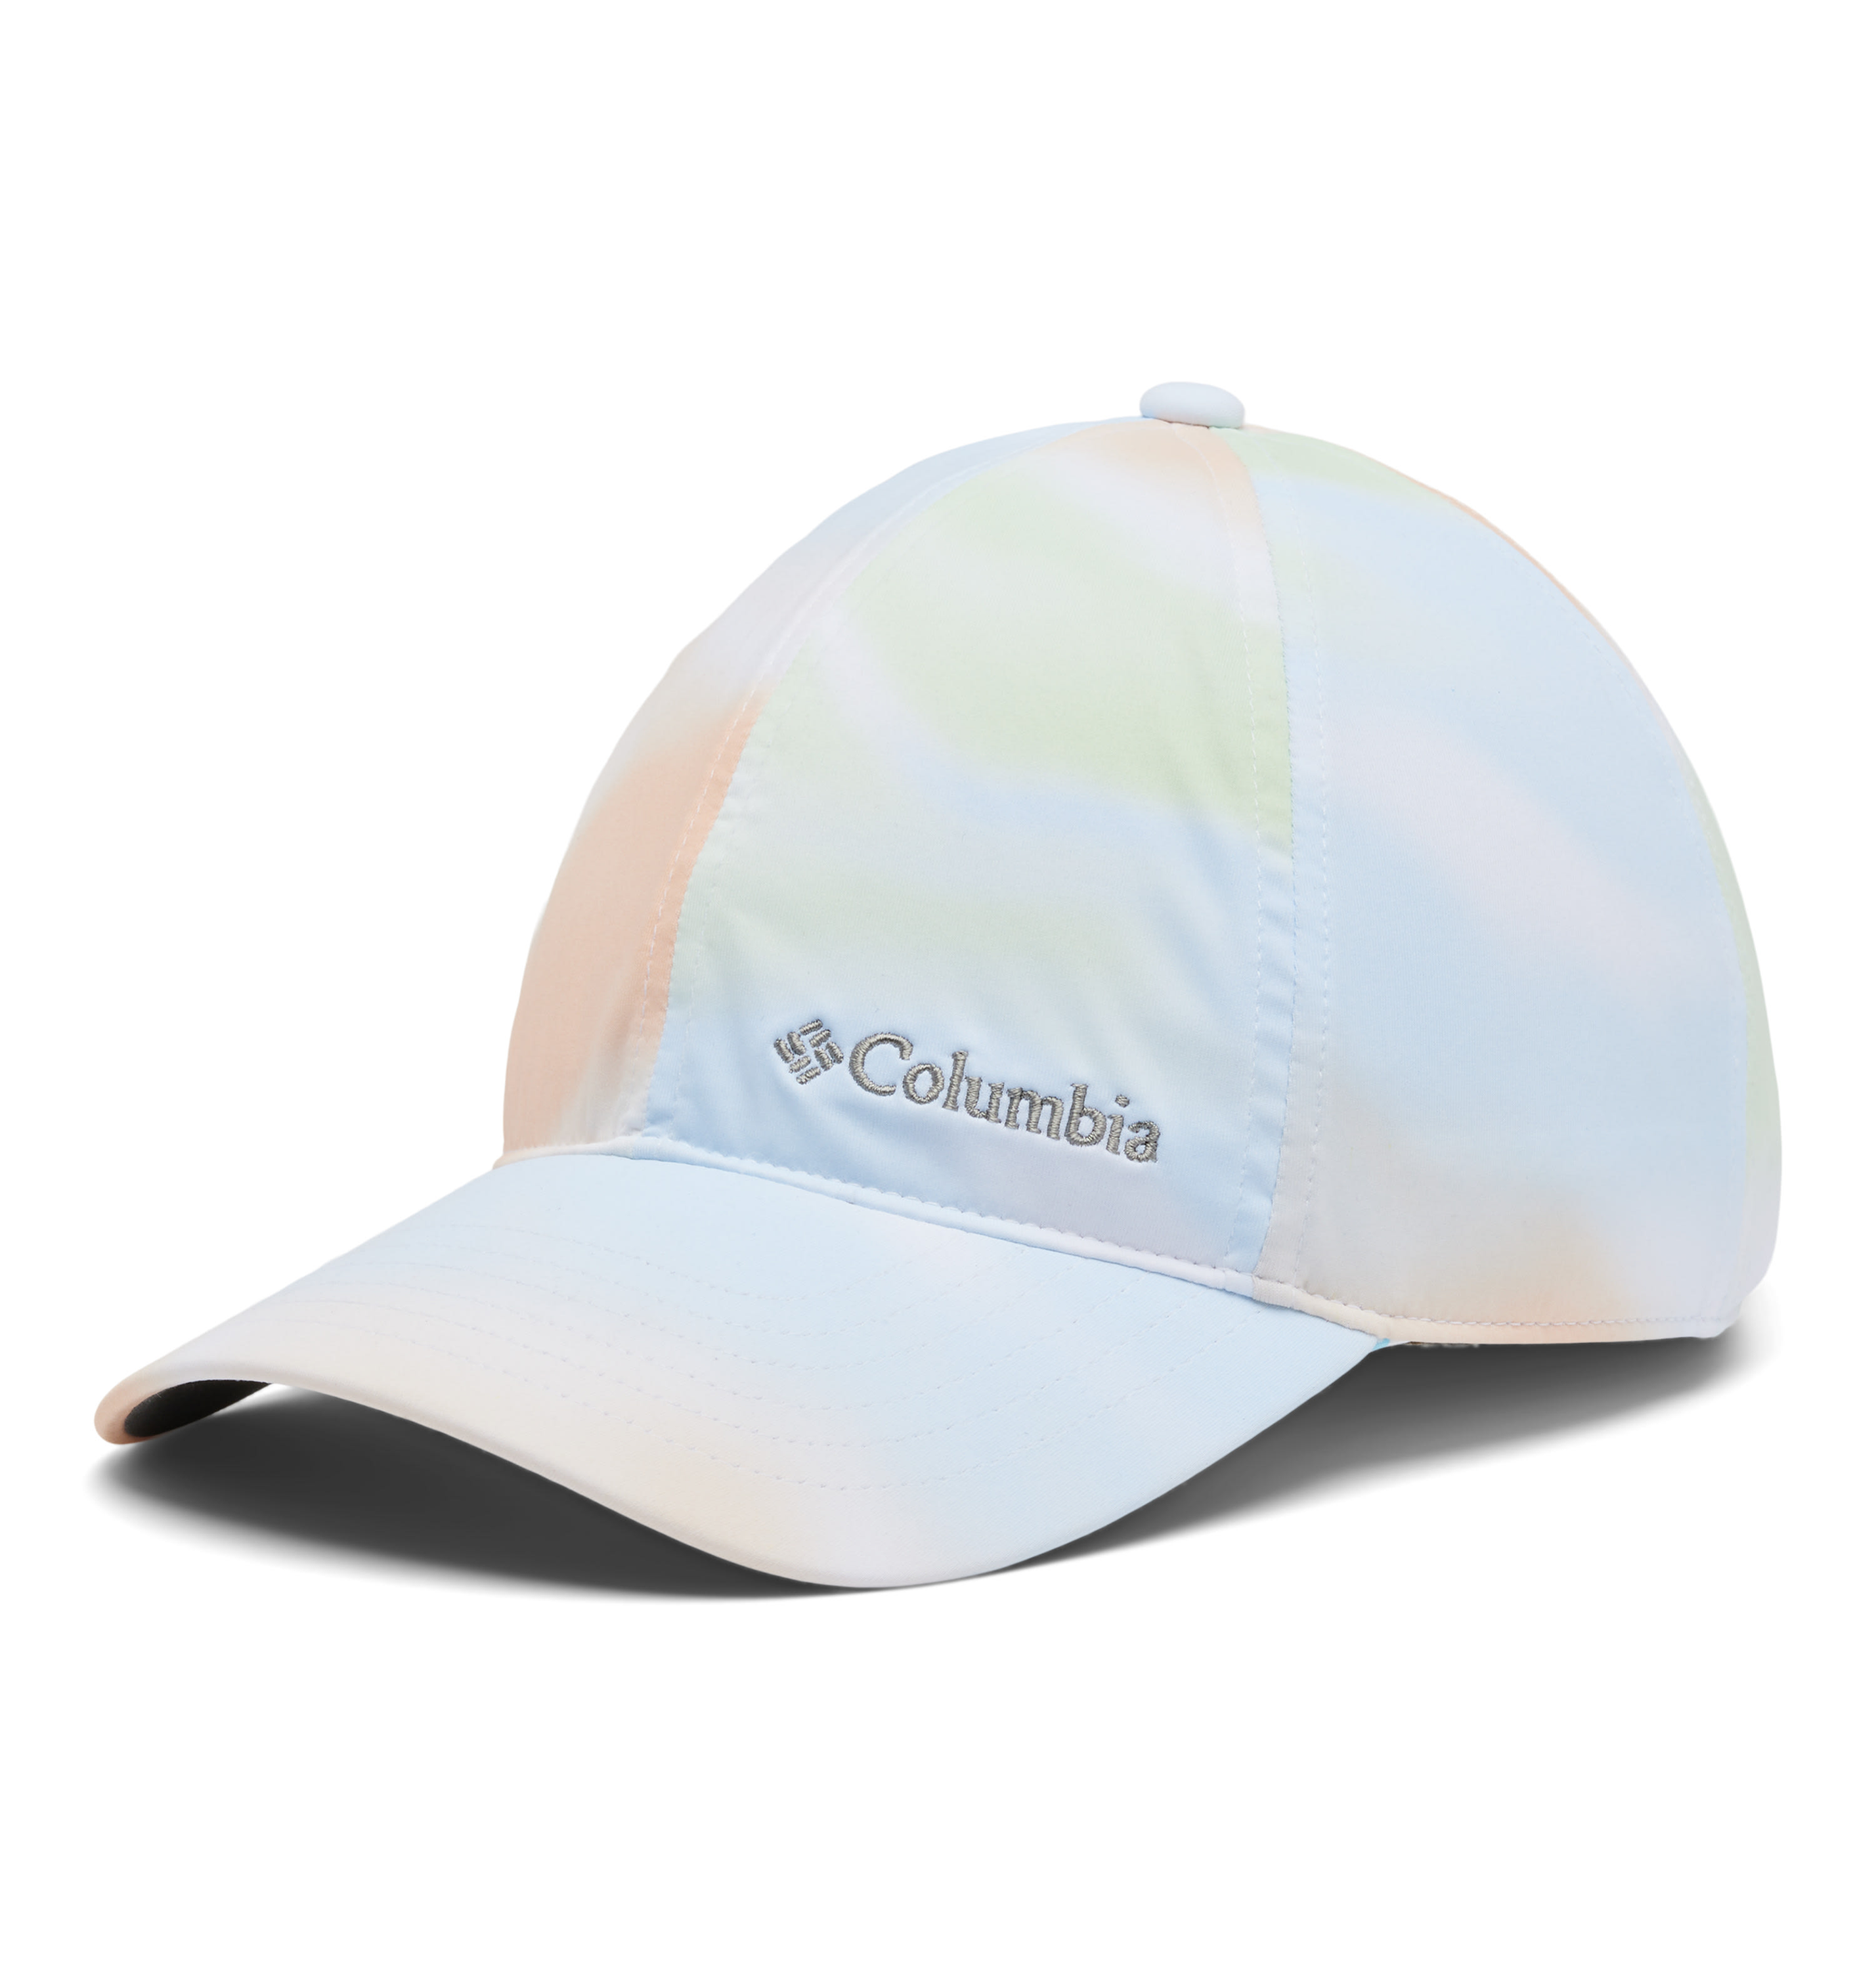 Cabelas Hat Cap Club Strapback Casual Outdoor Golf Baseball Gray